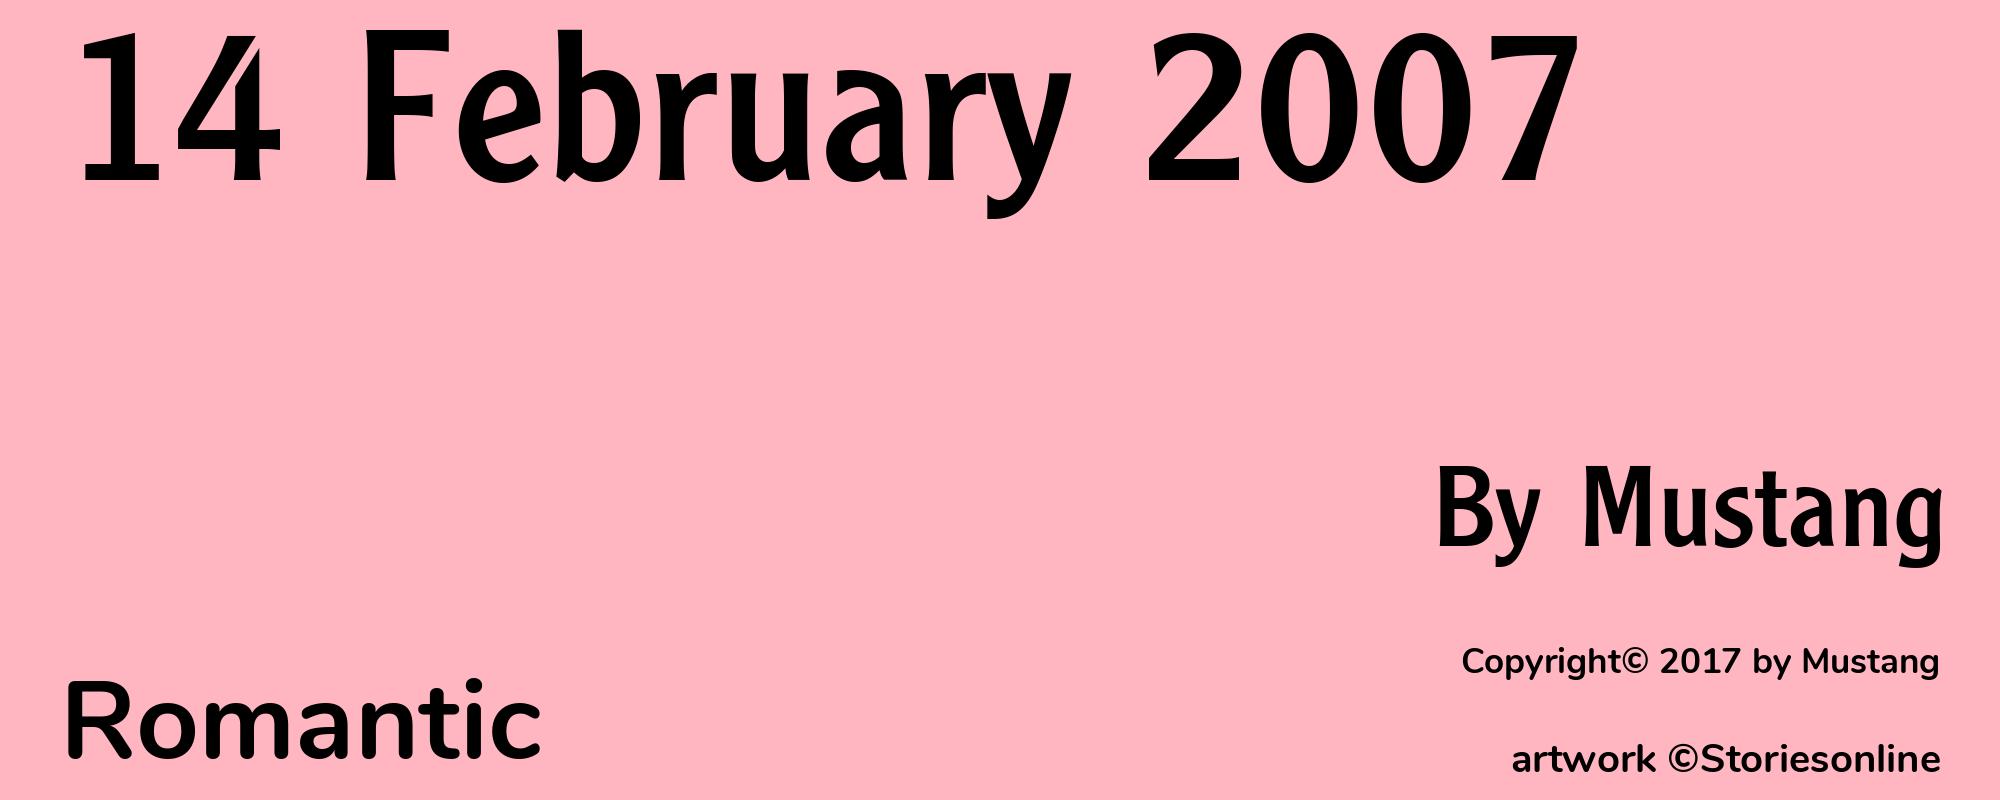 14 February 2007 - Cover